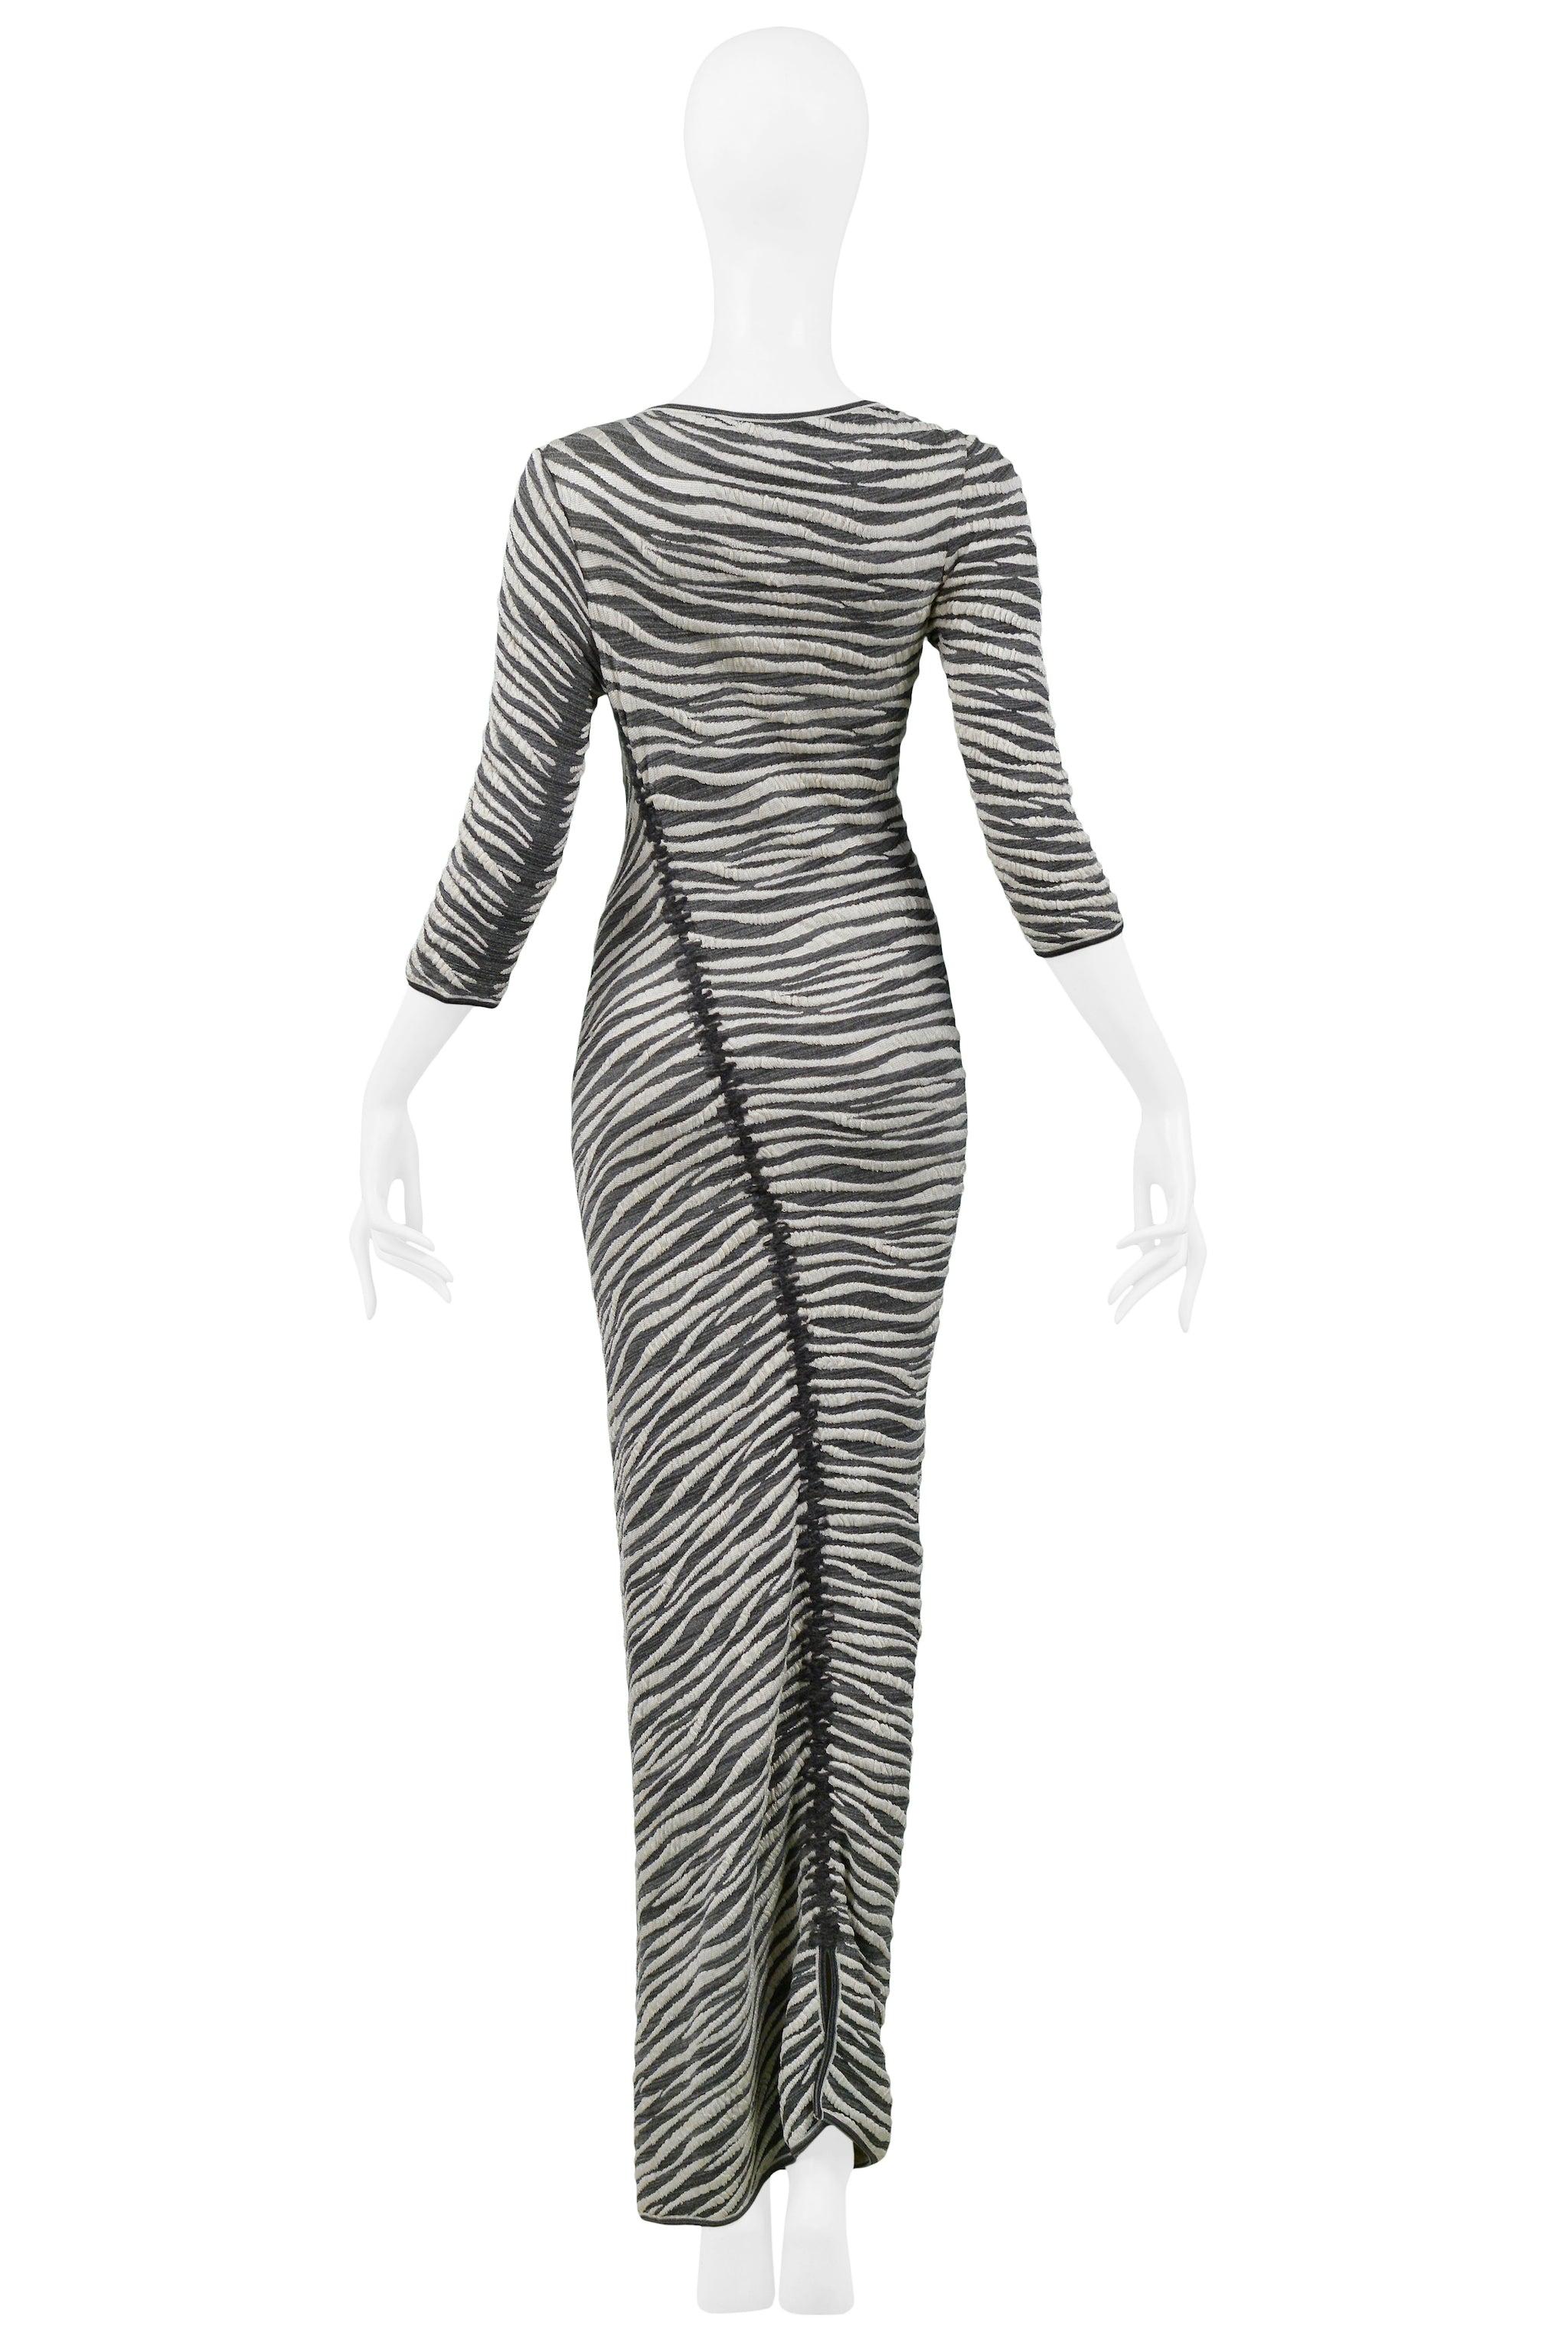 Gray Gianfranco Ferre Grey & White Zebra Stripe Maxi Runway Dress 1999 For Sale